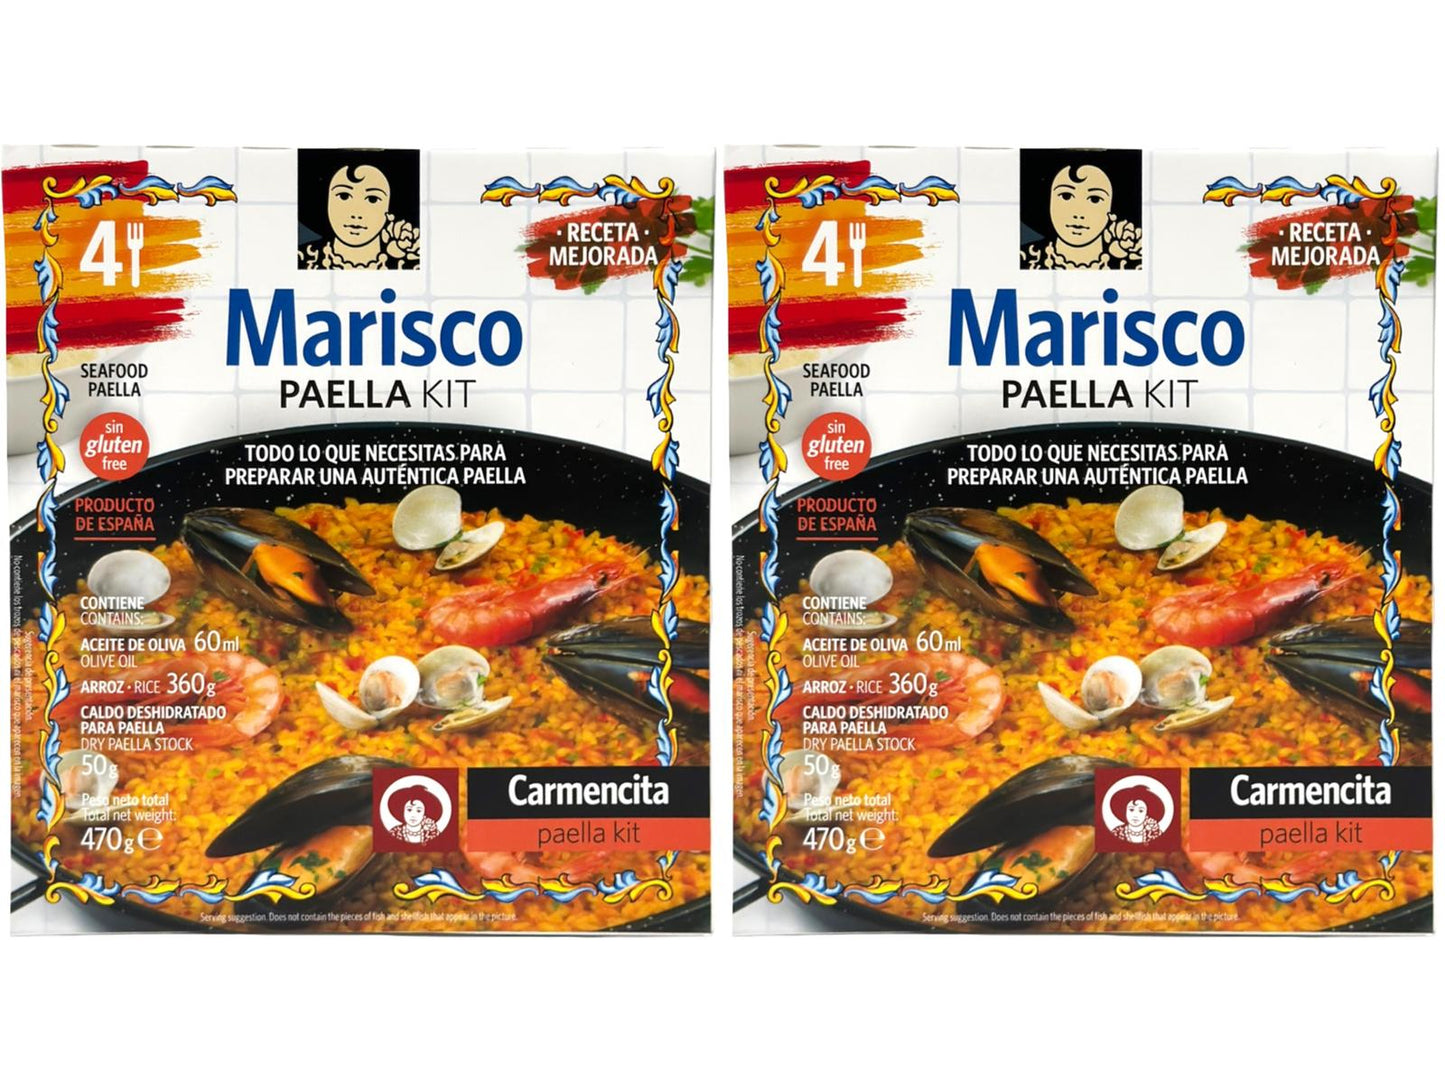 Carmencita Marisco Seafood Paella Kit 4 serves 470g Twin Pack 940g total